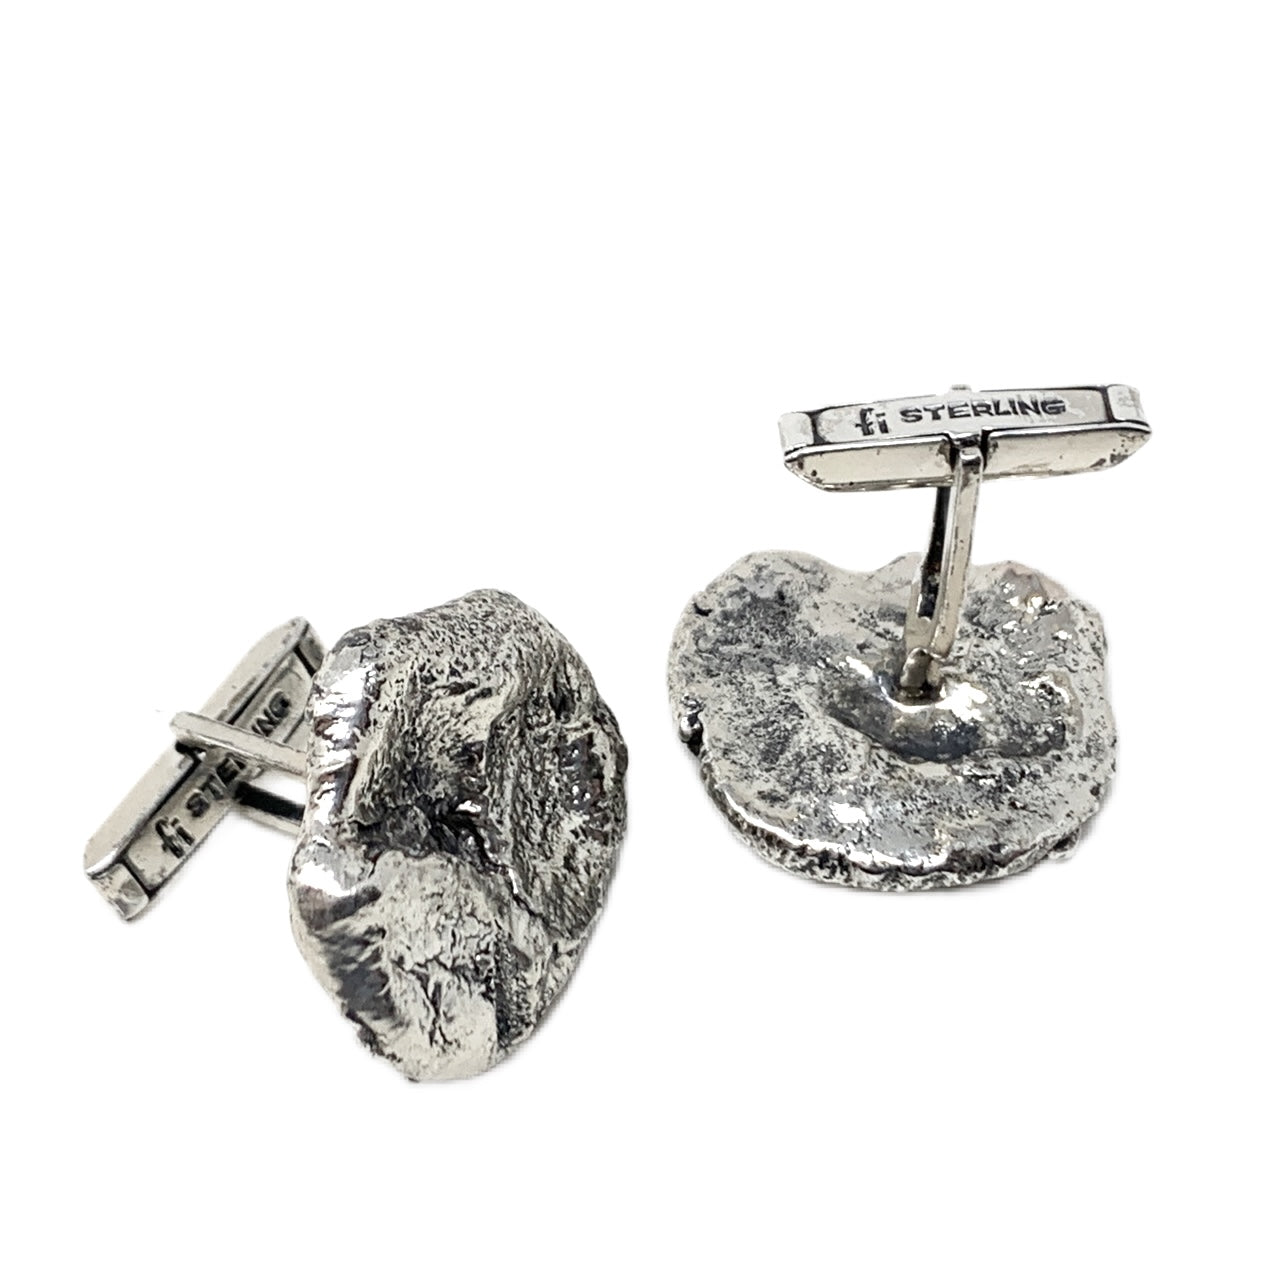 Harold Fithian Sterling Silver Nugget Modernist Cufflinks & Tie Pin